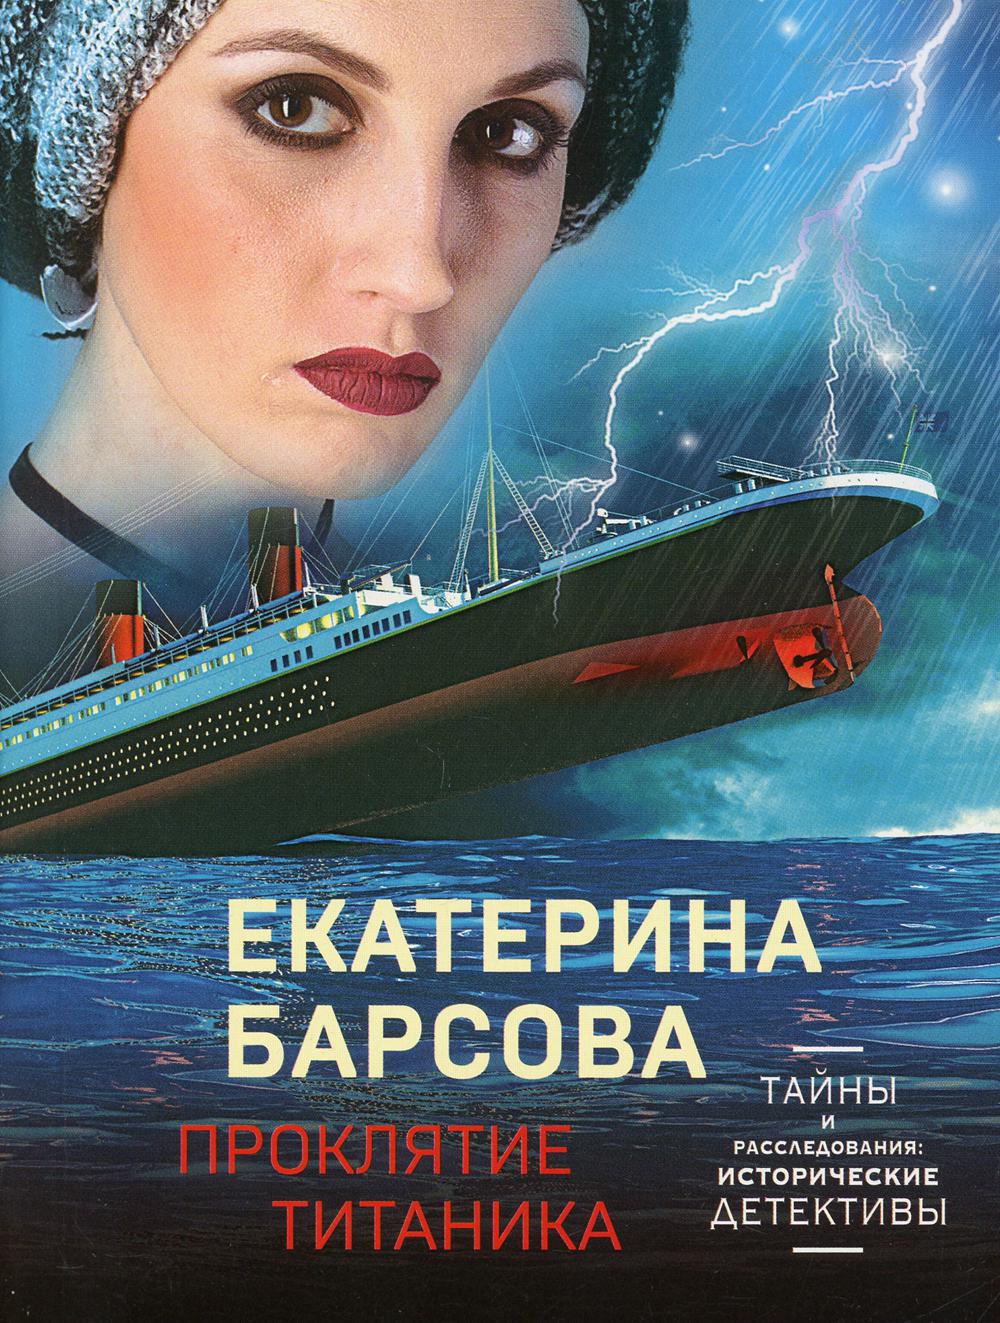 Проклятие Титаника